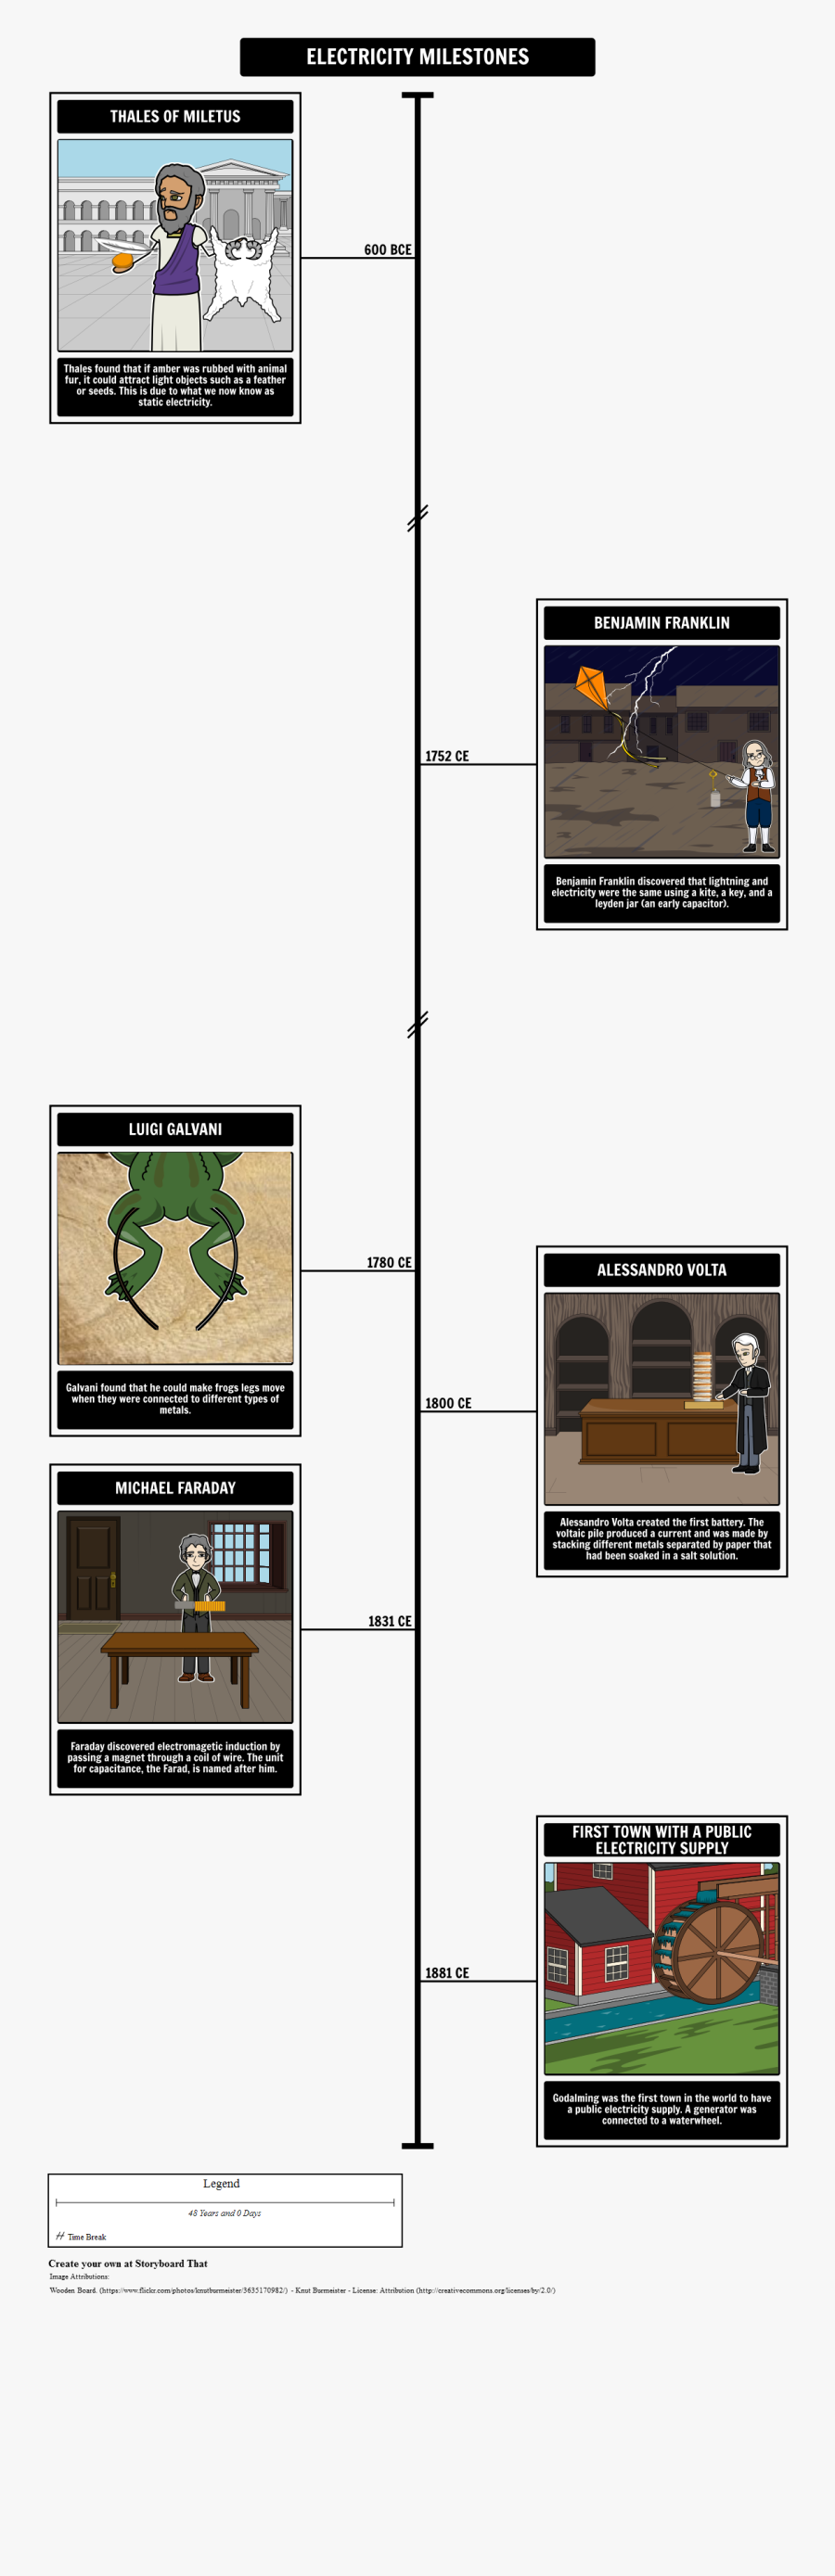 Cronologia De La Electricidad, Transparent Clipart